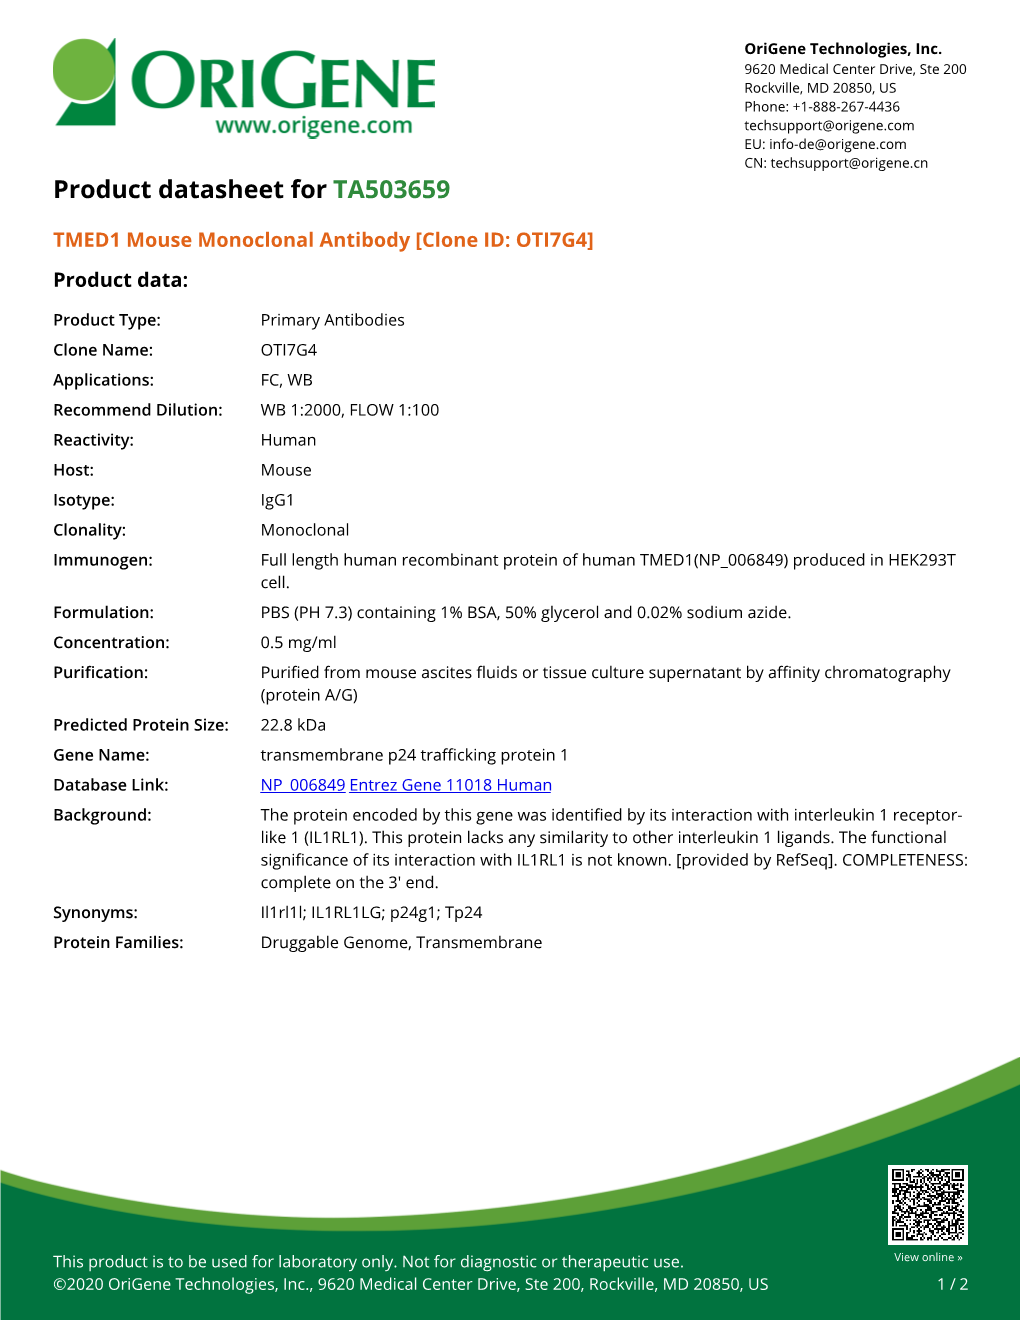 TMED1 Mouse Monoclonal Antibody [Clone ID: OTI7G4] Product Data